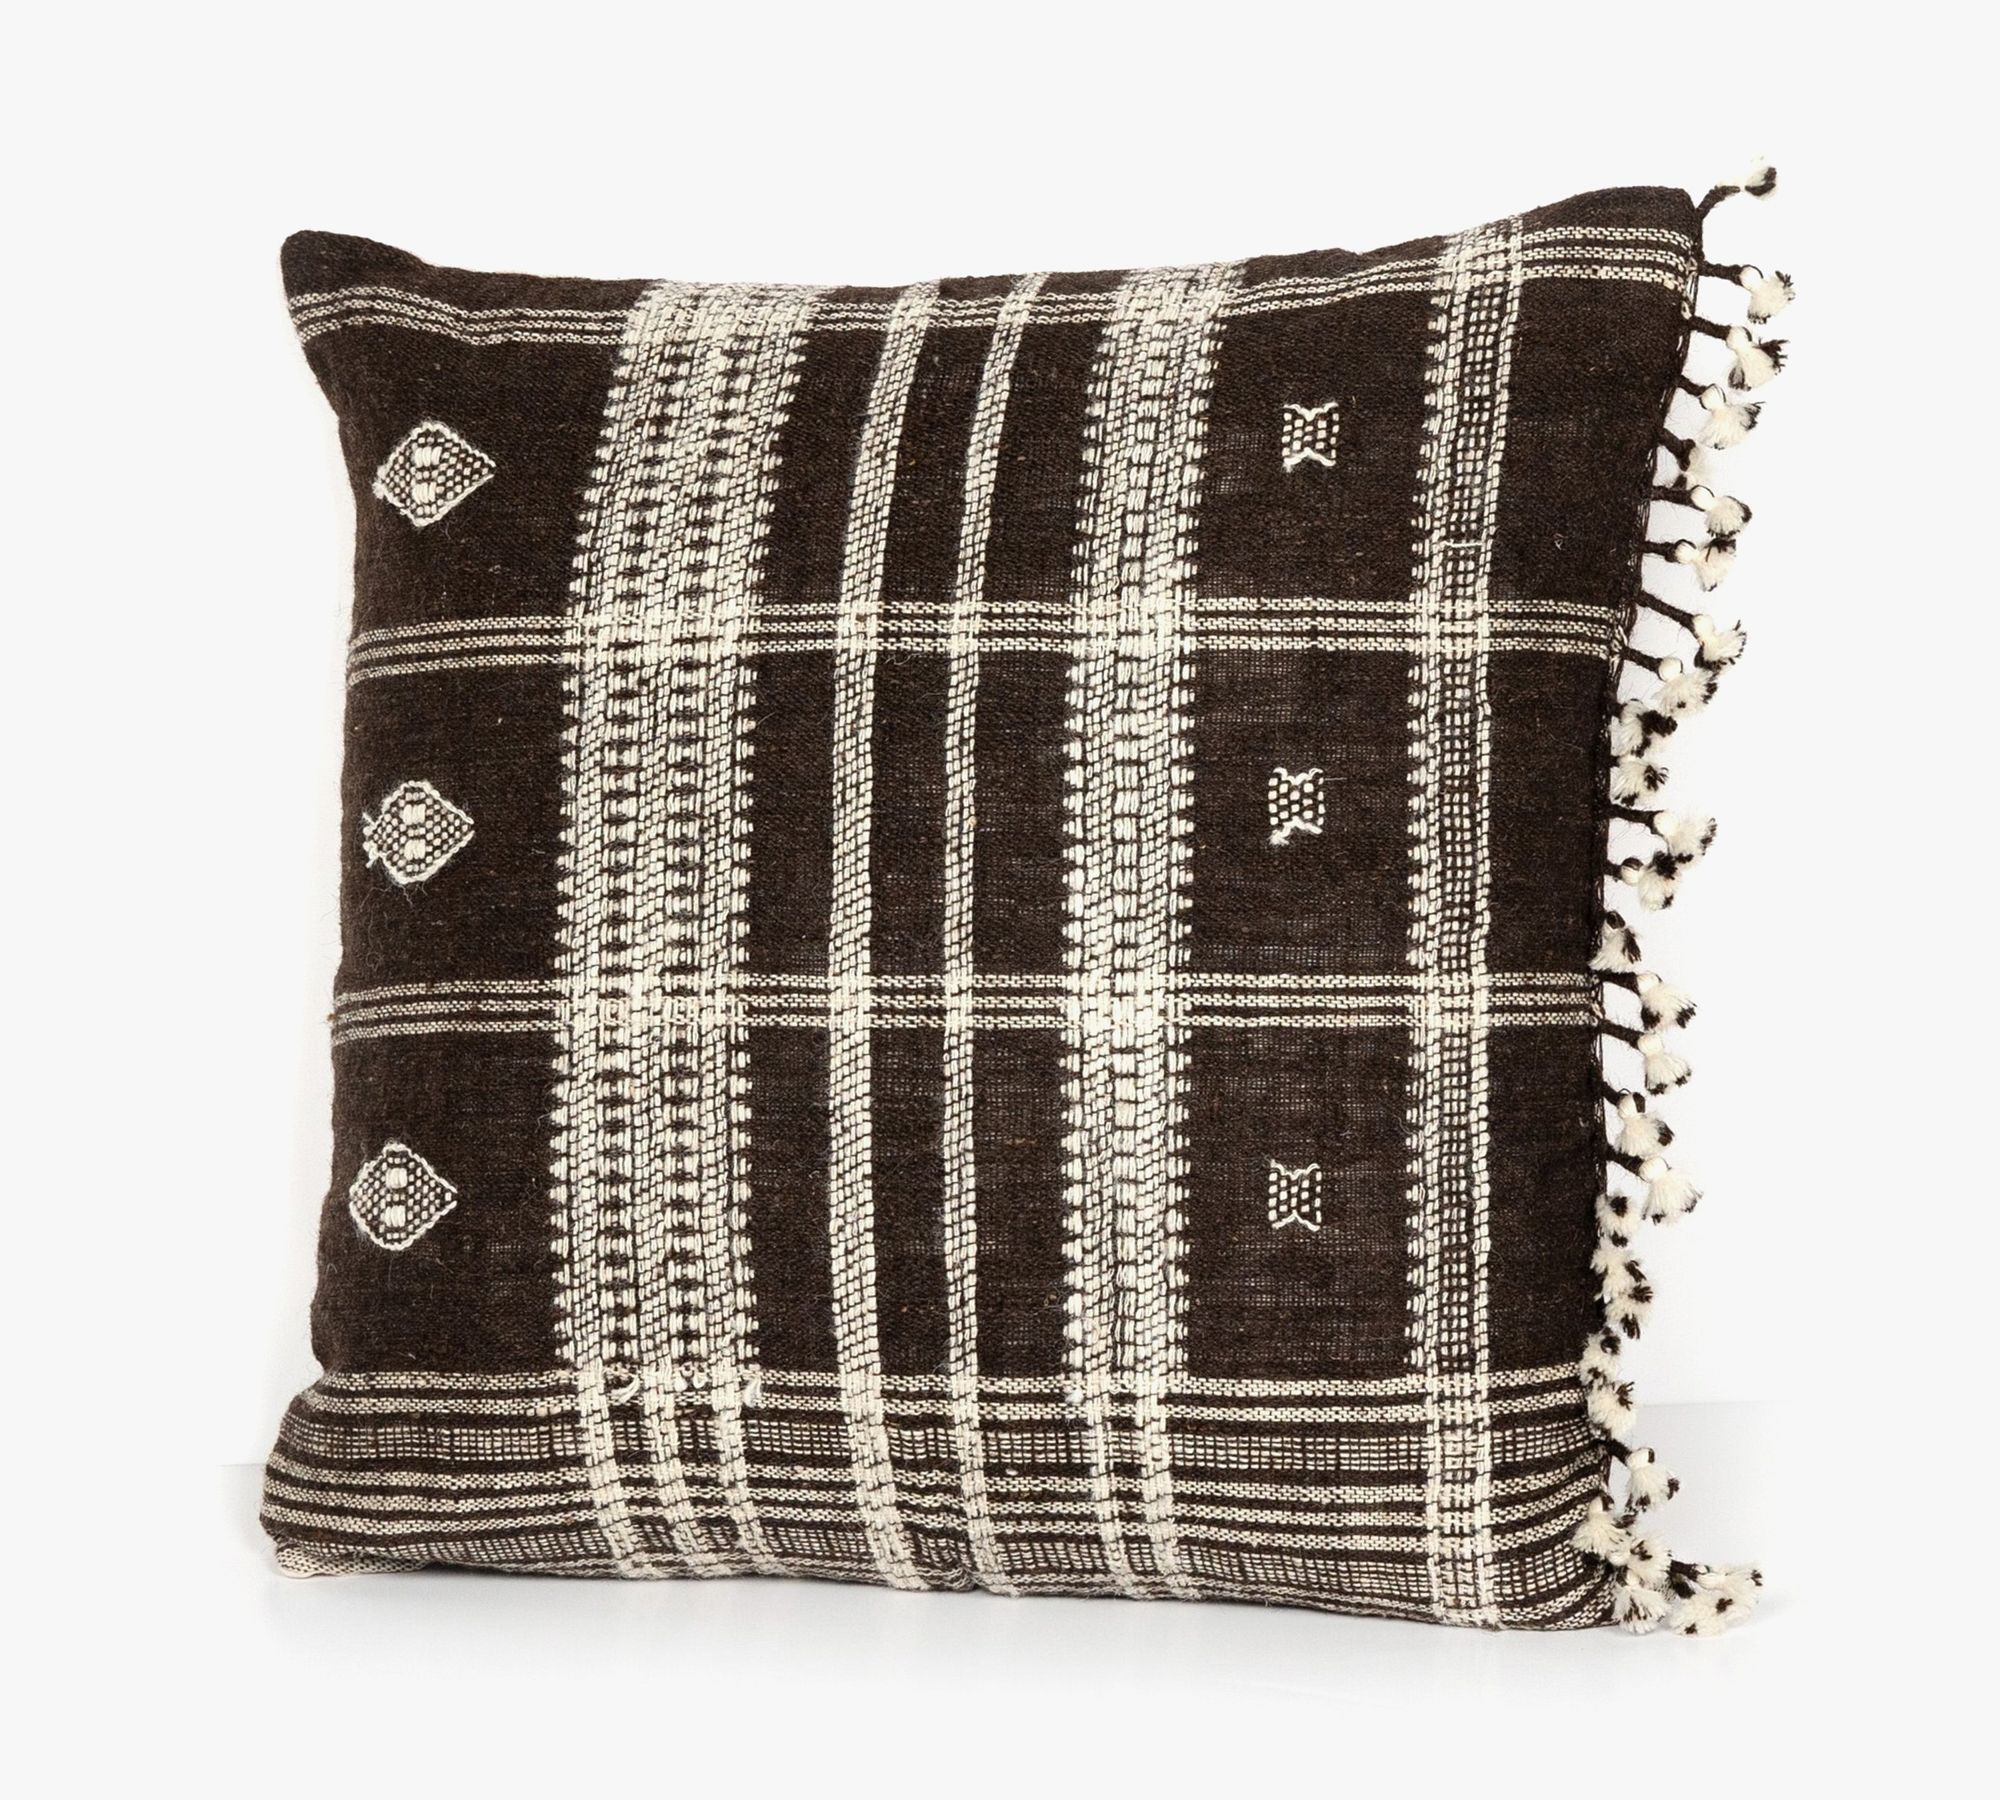 Suna Rustic Handwoven Pillow